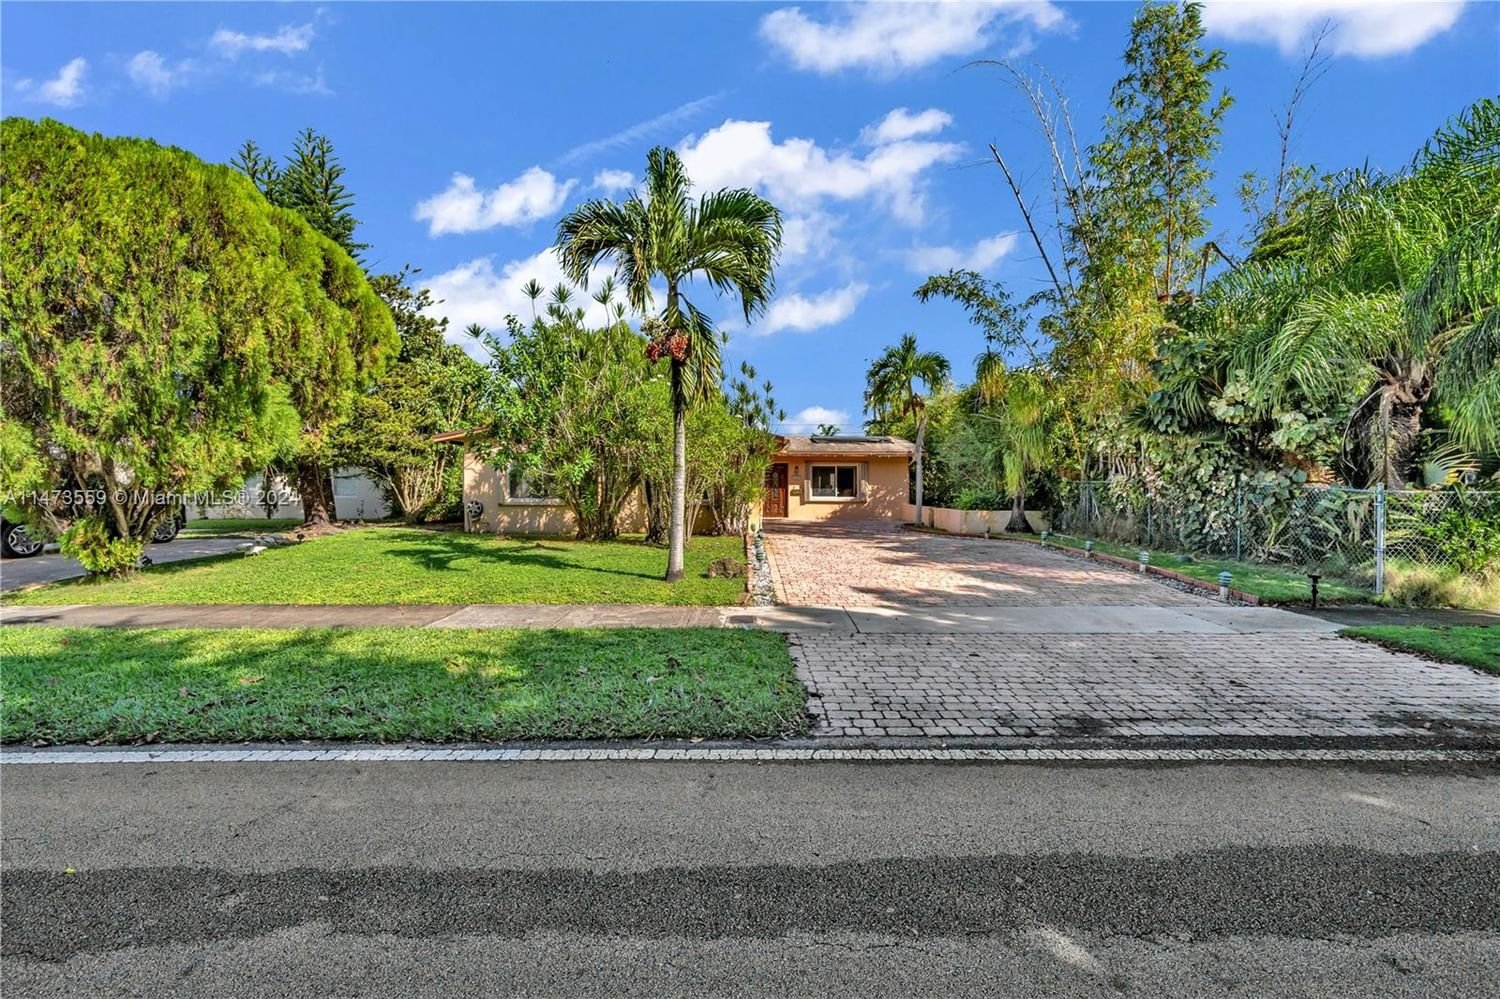 Real estate property located at 6421 36th St, Miami-Dade County, Miami, FL